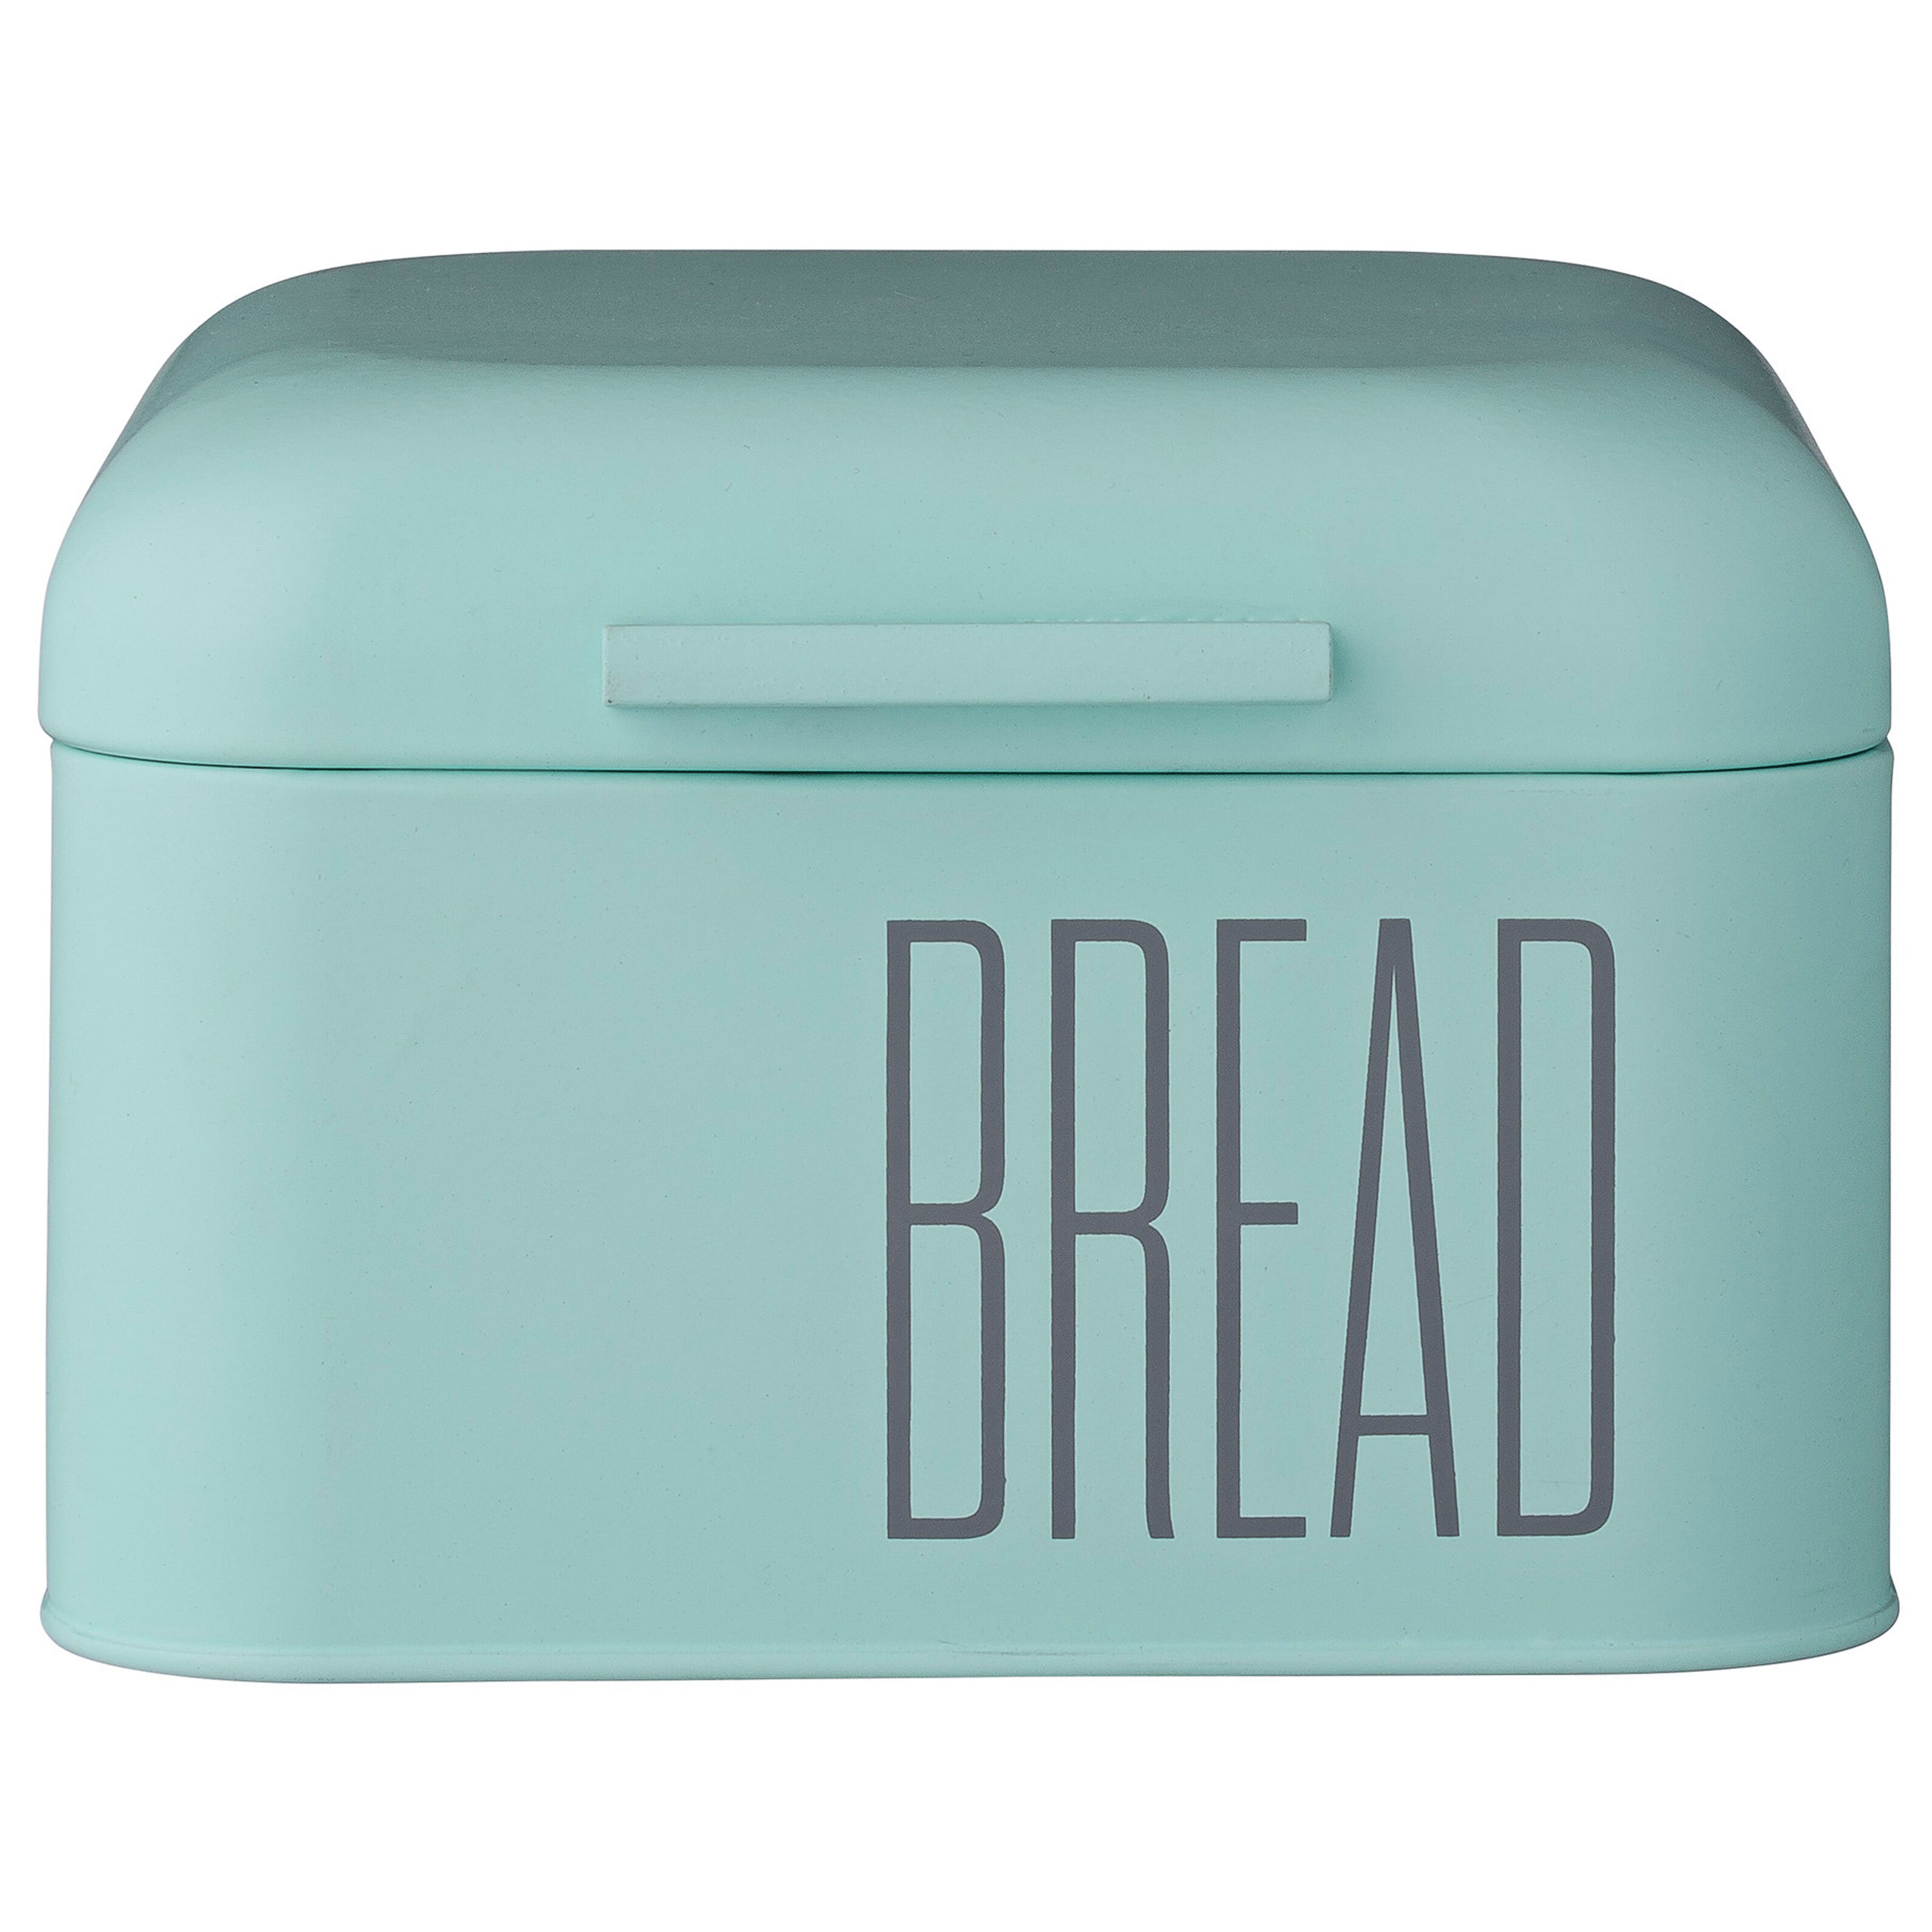 Bronze bread bin